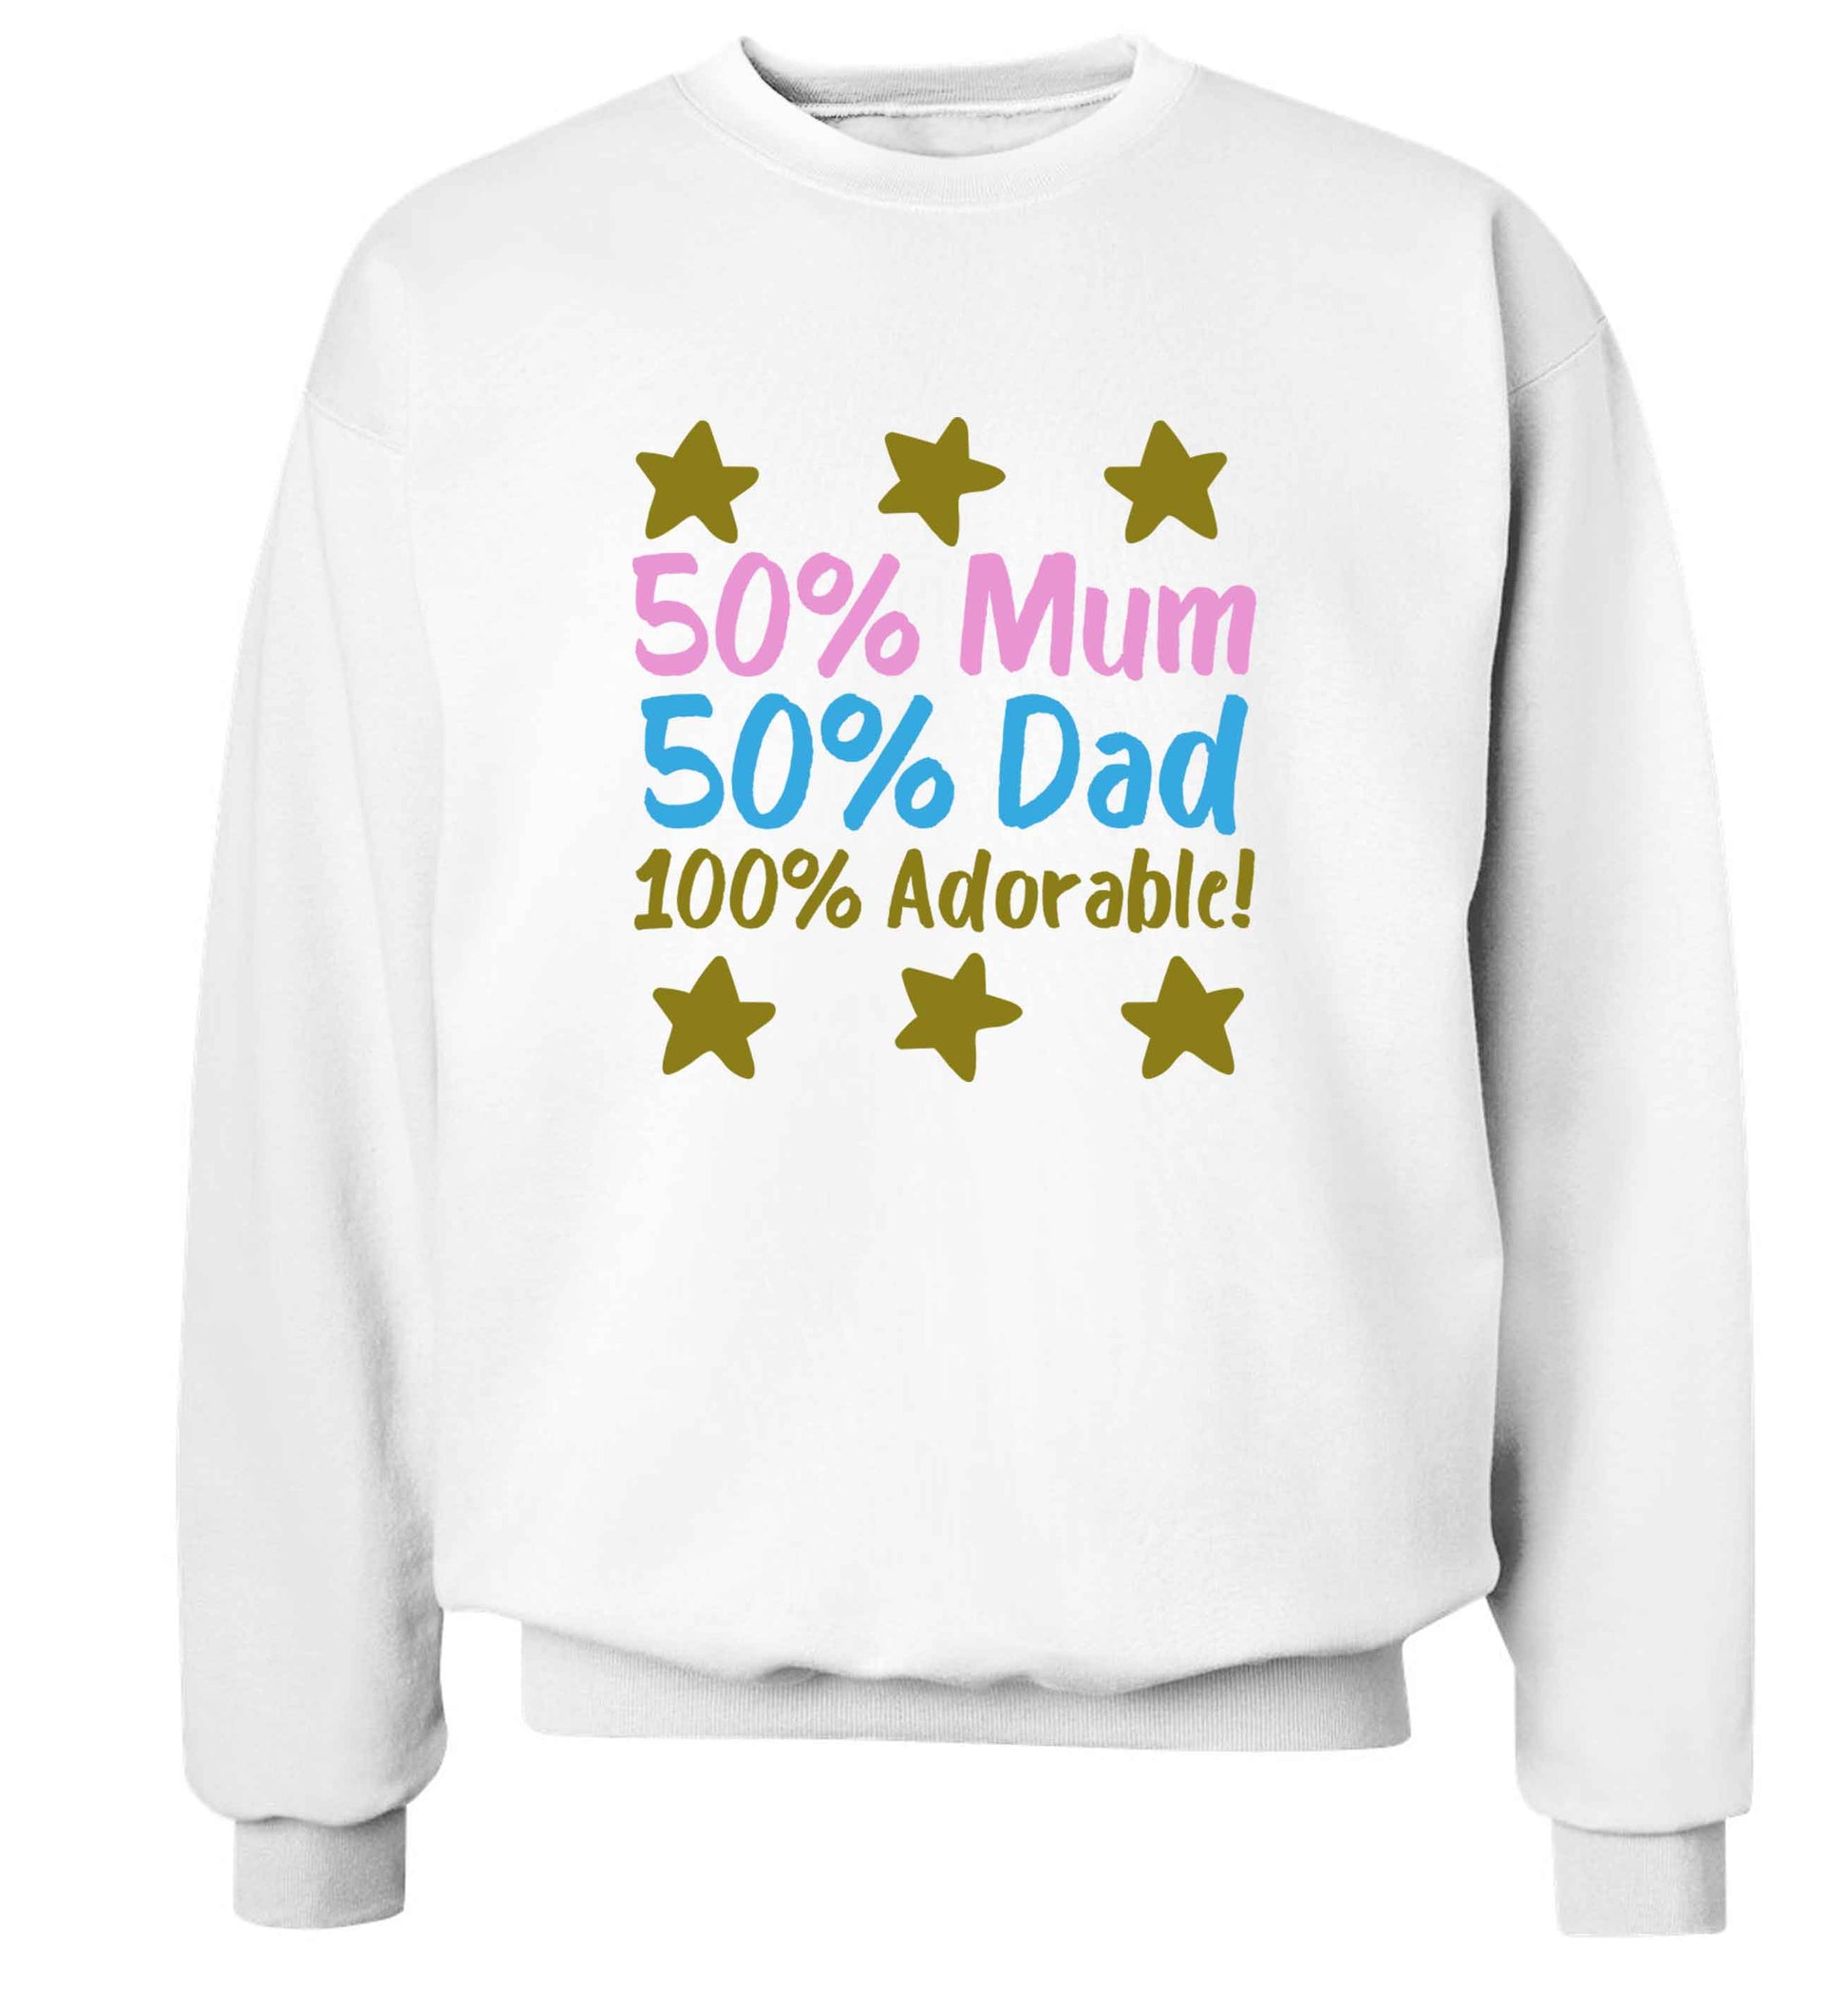 50% mum 50% dad 100% adorable adult's unisex white sweater 2XL